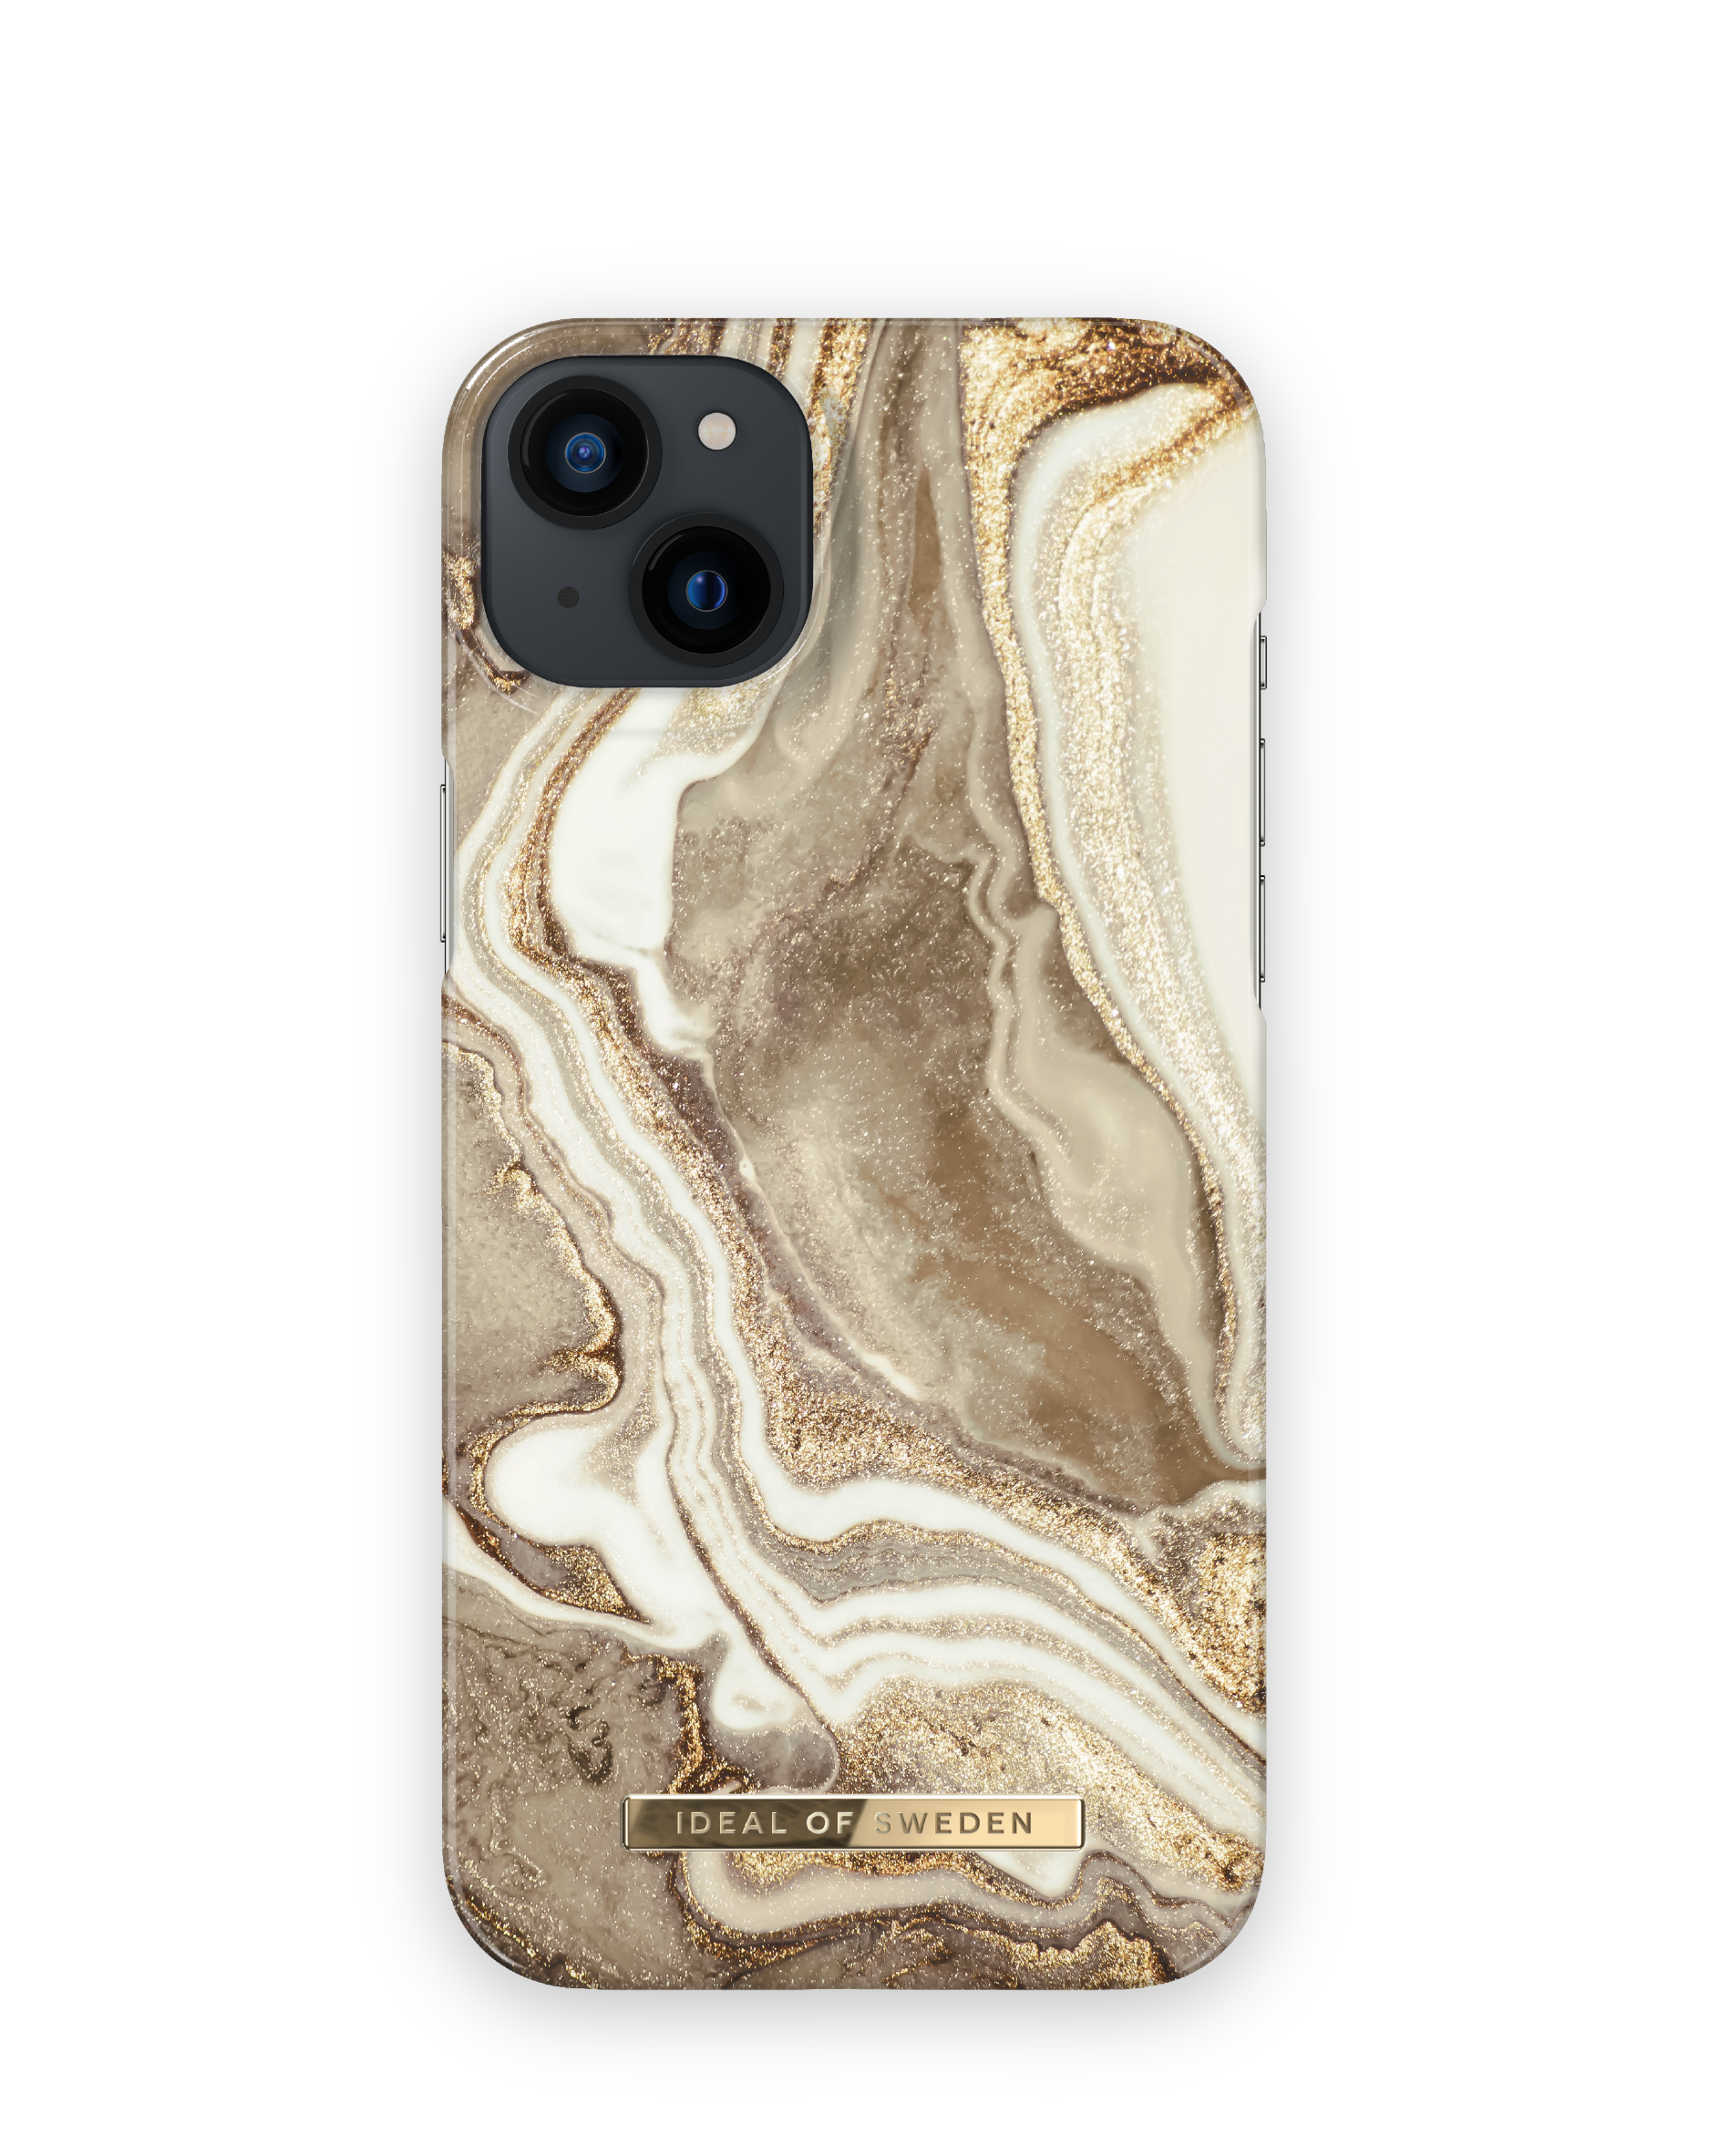 SWEDEN Backcover, Golden Apple, Sand 14 IDEAL iPhone OF IDFCGM19-I2267-164, Marble Plus,